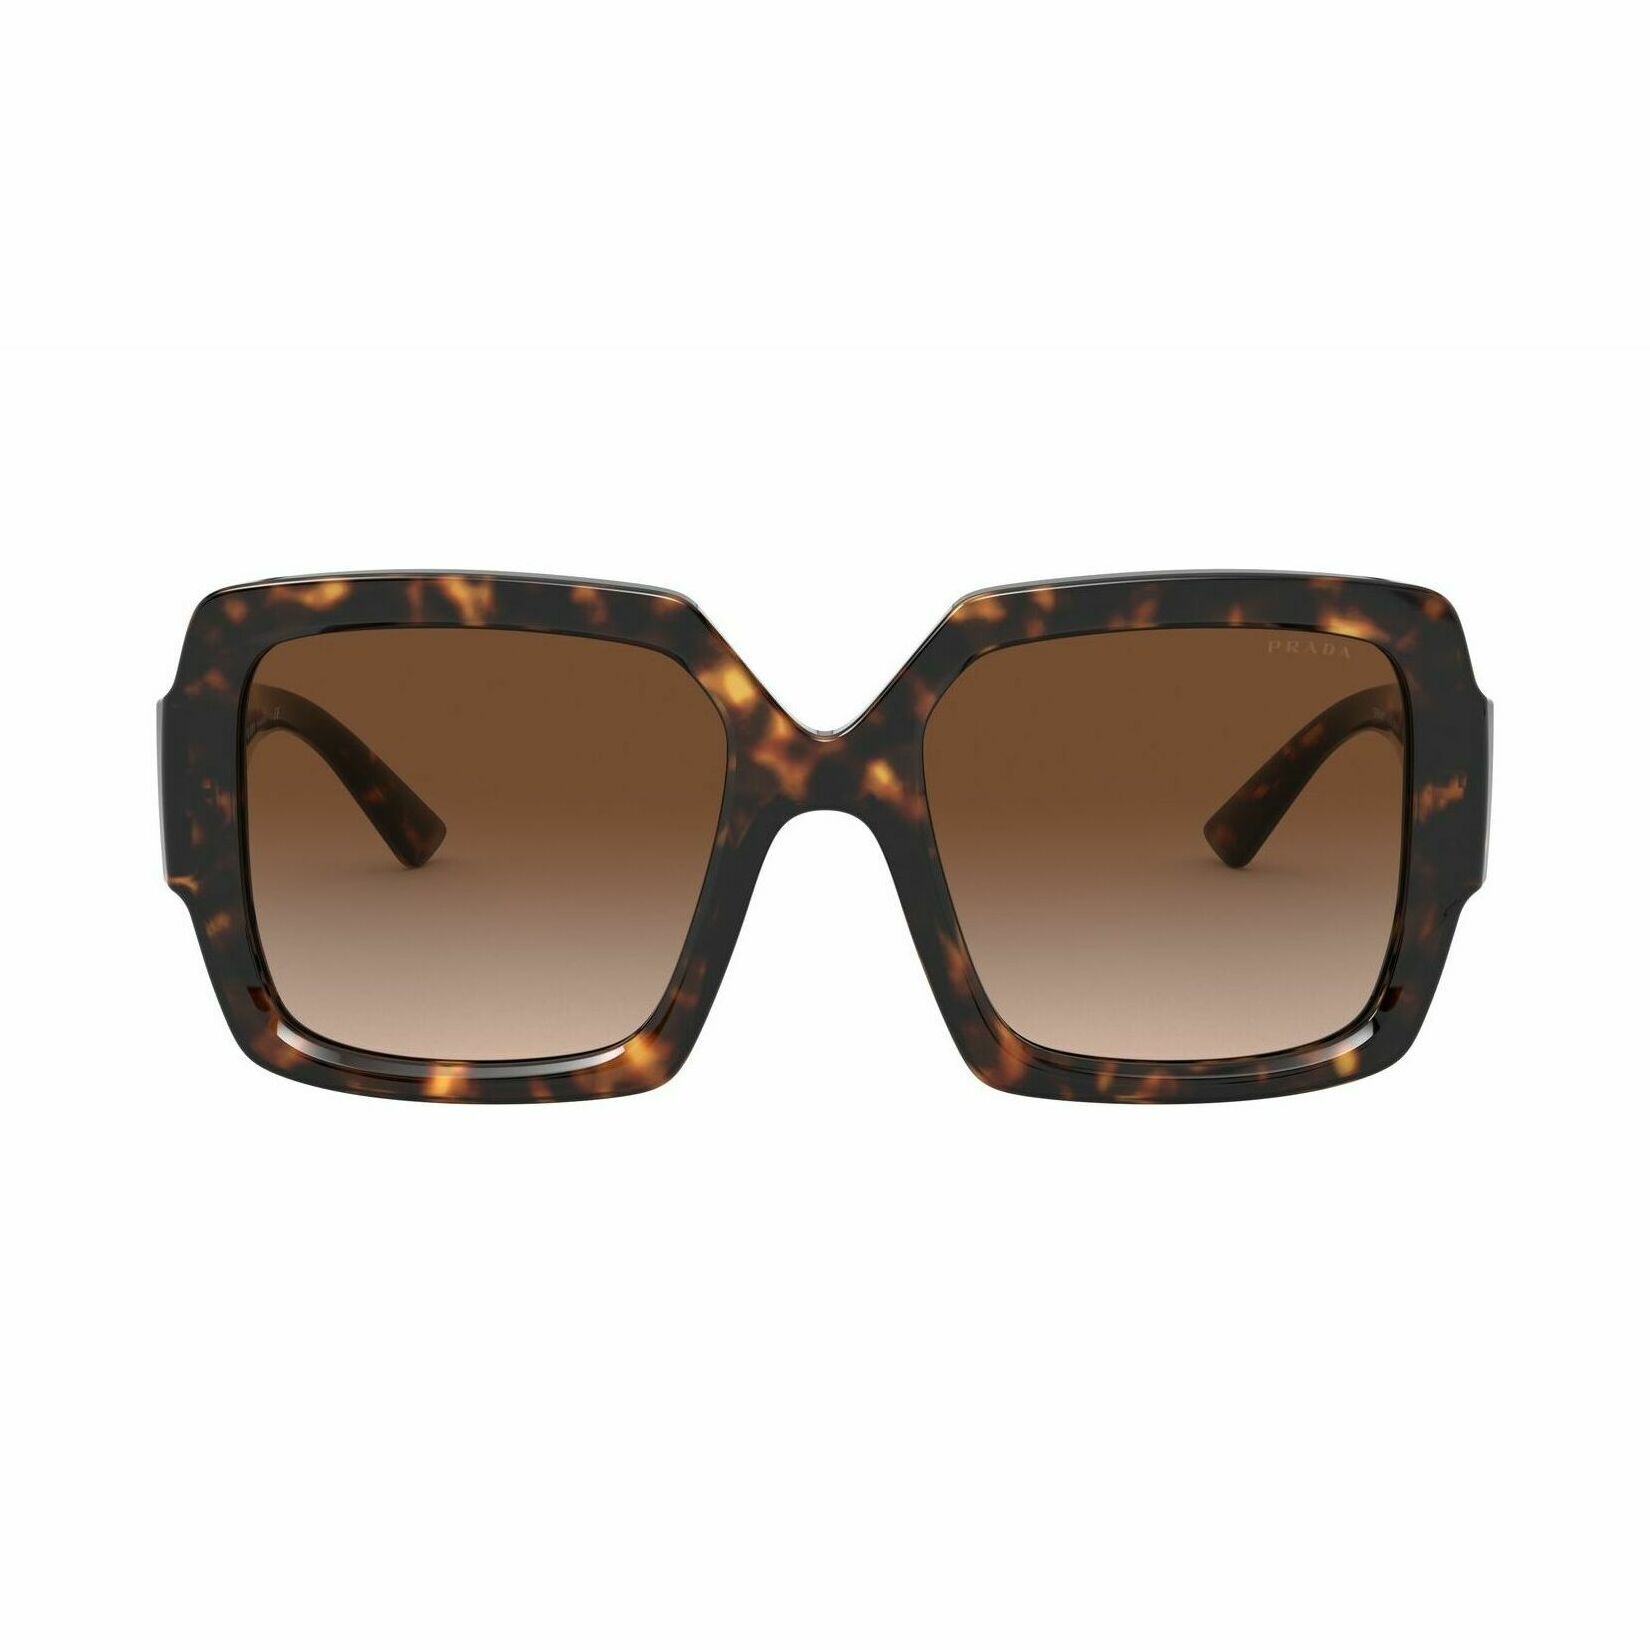 PR 21XS Square Sunglasses 2AU6S1 - size 54